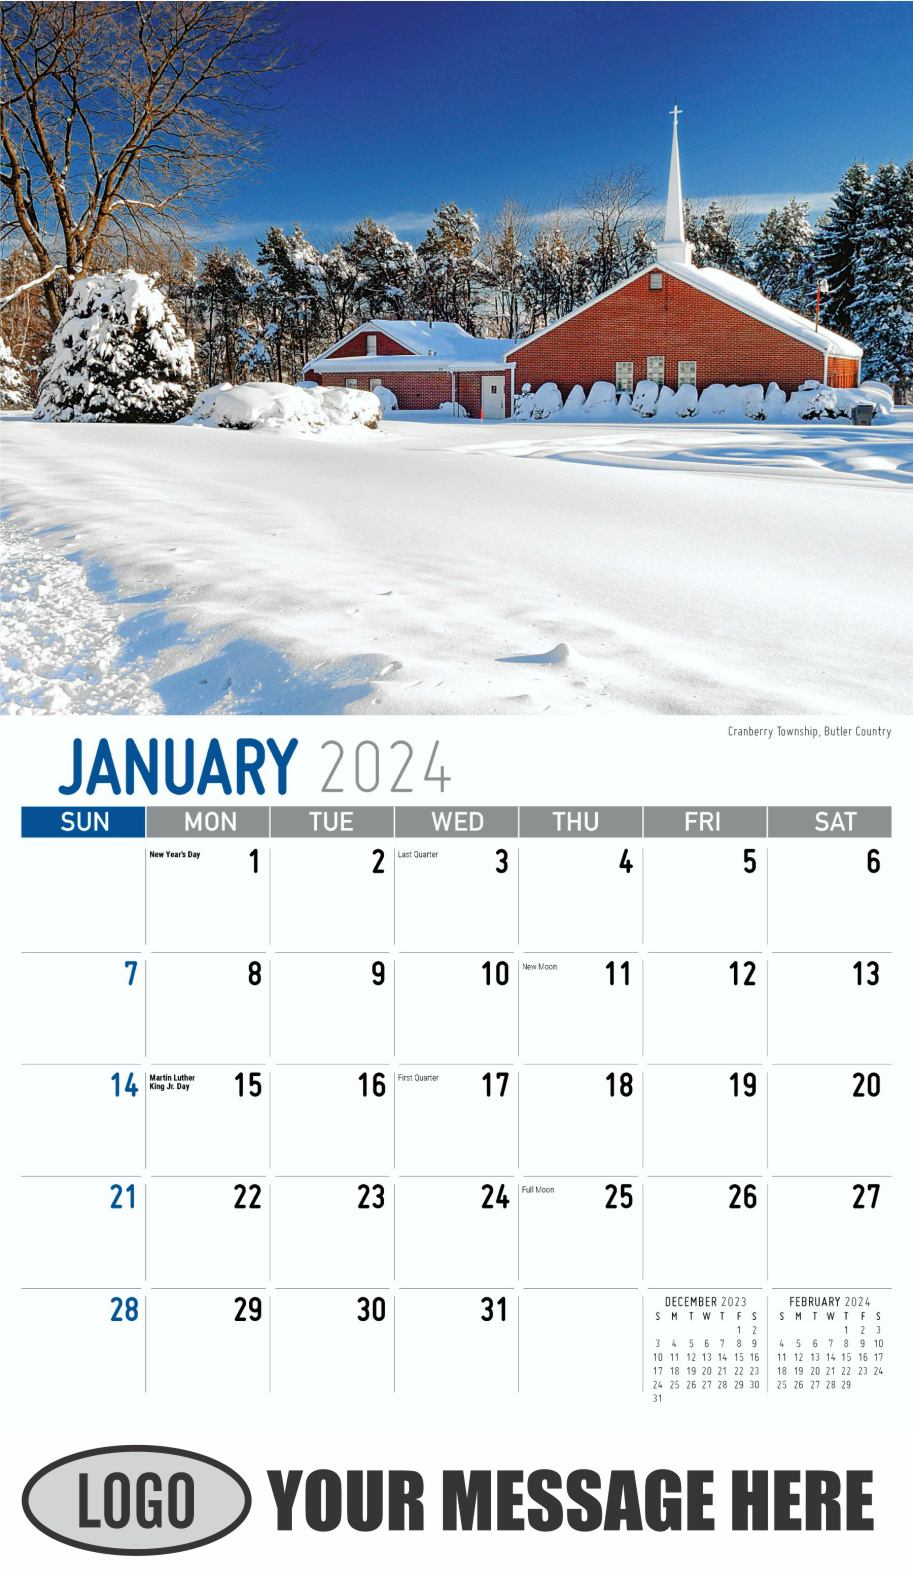 Scenes of Pennsylvania 2024 Business Promotion Calendar - January